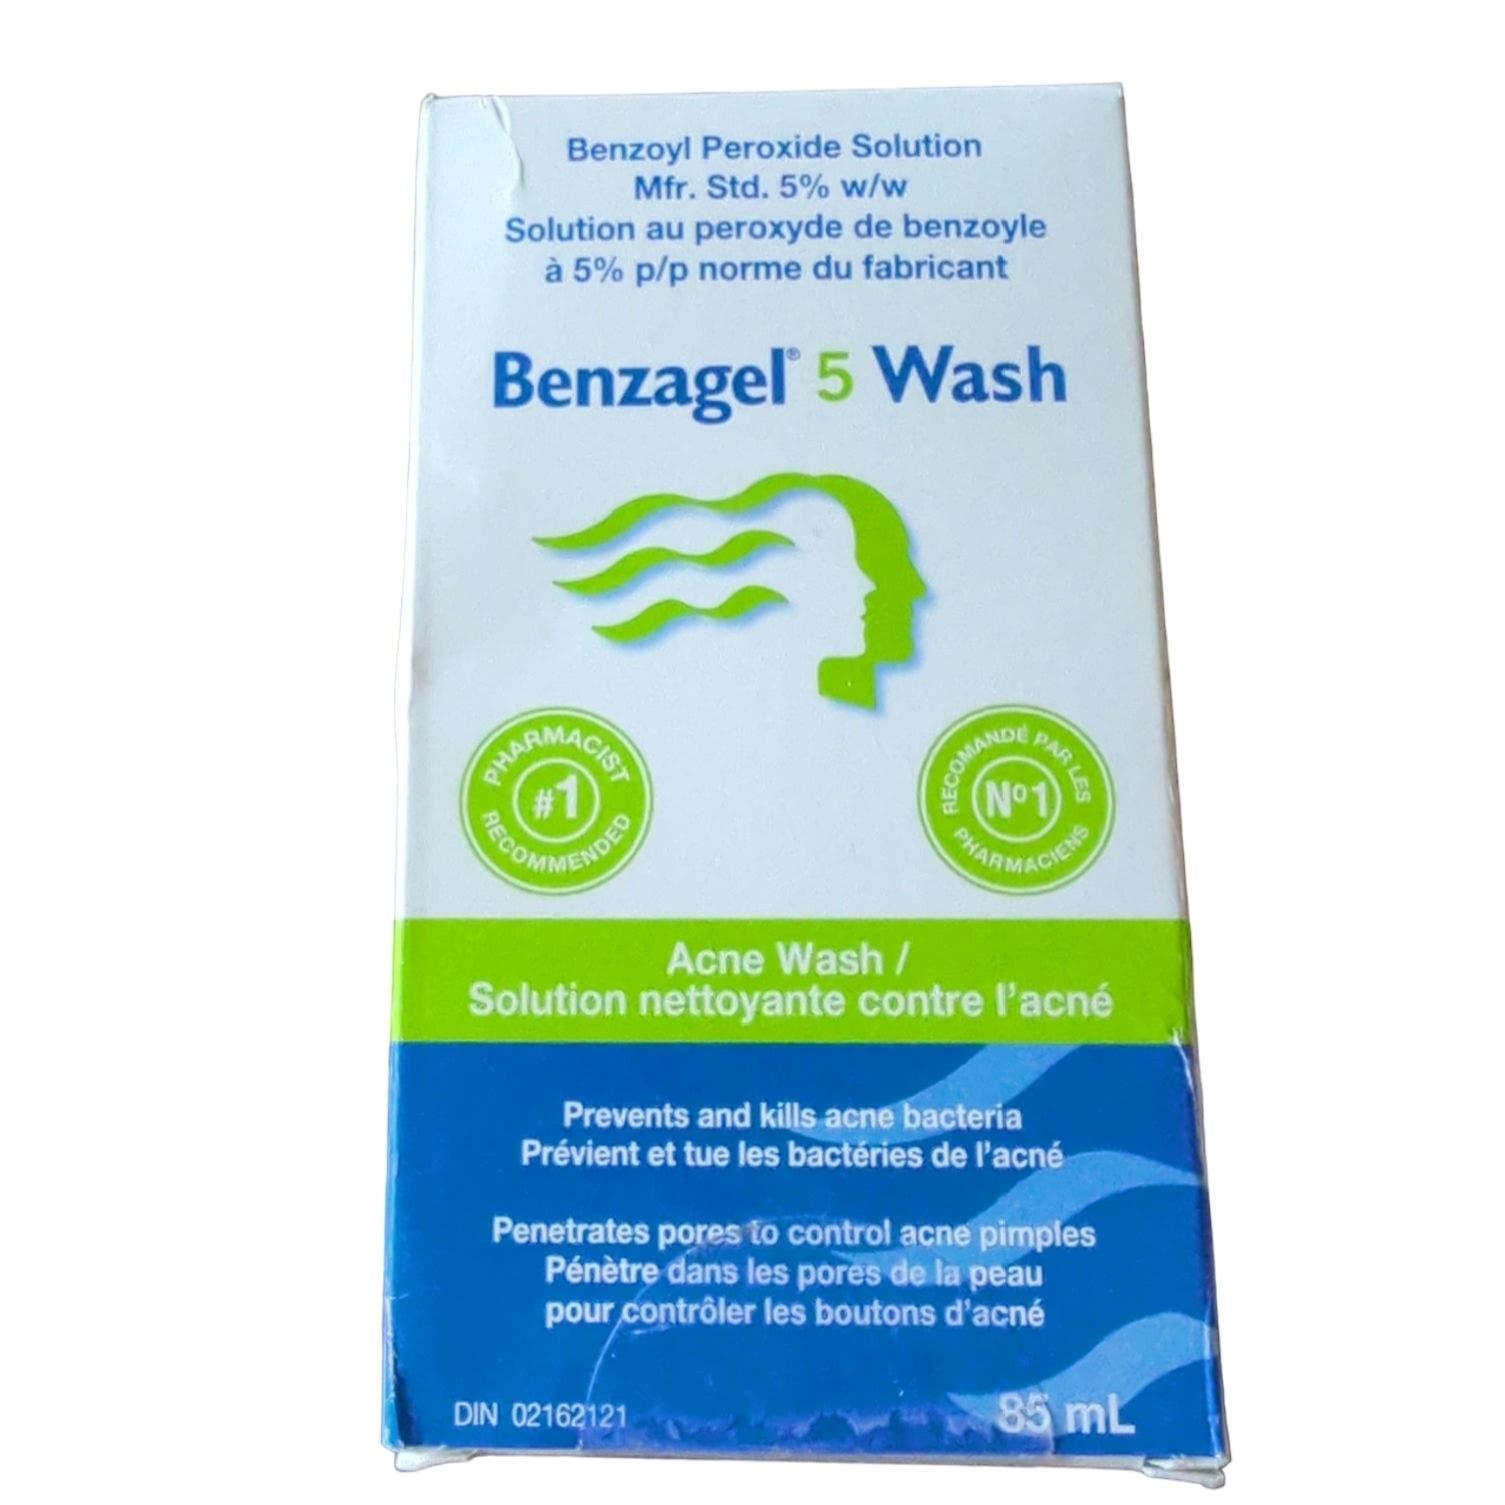 Benzagel 5 wash